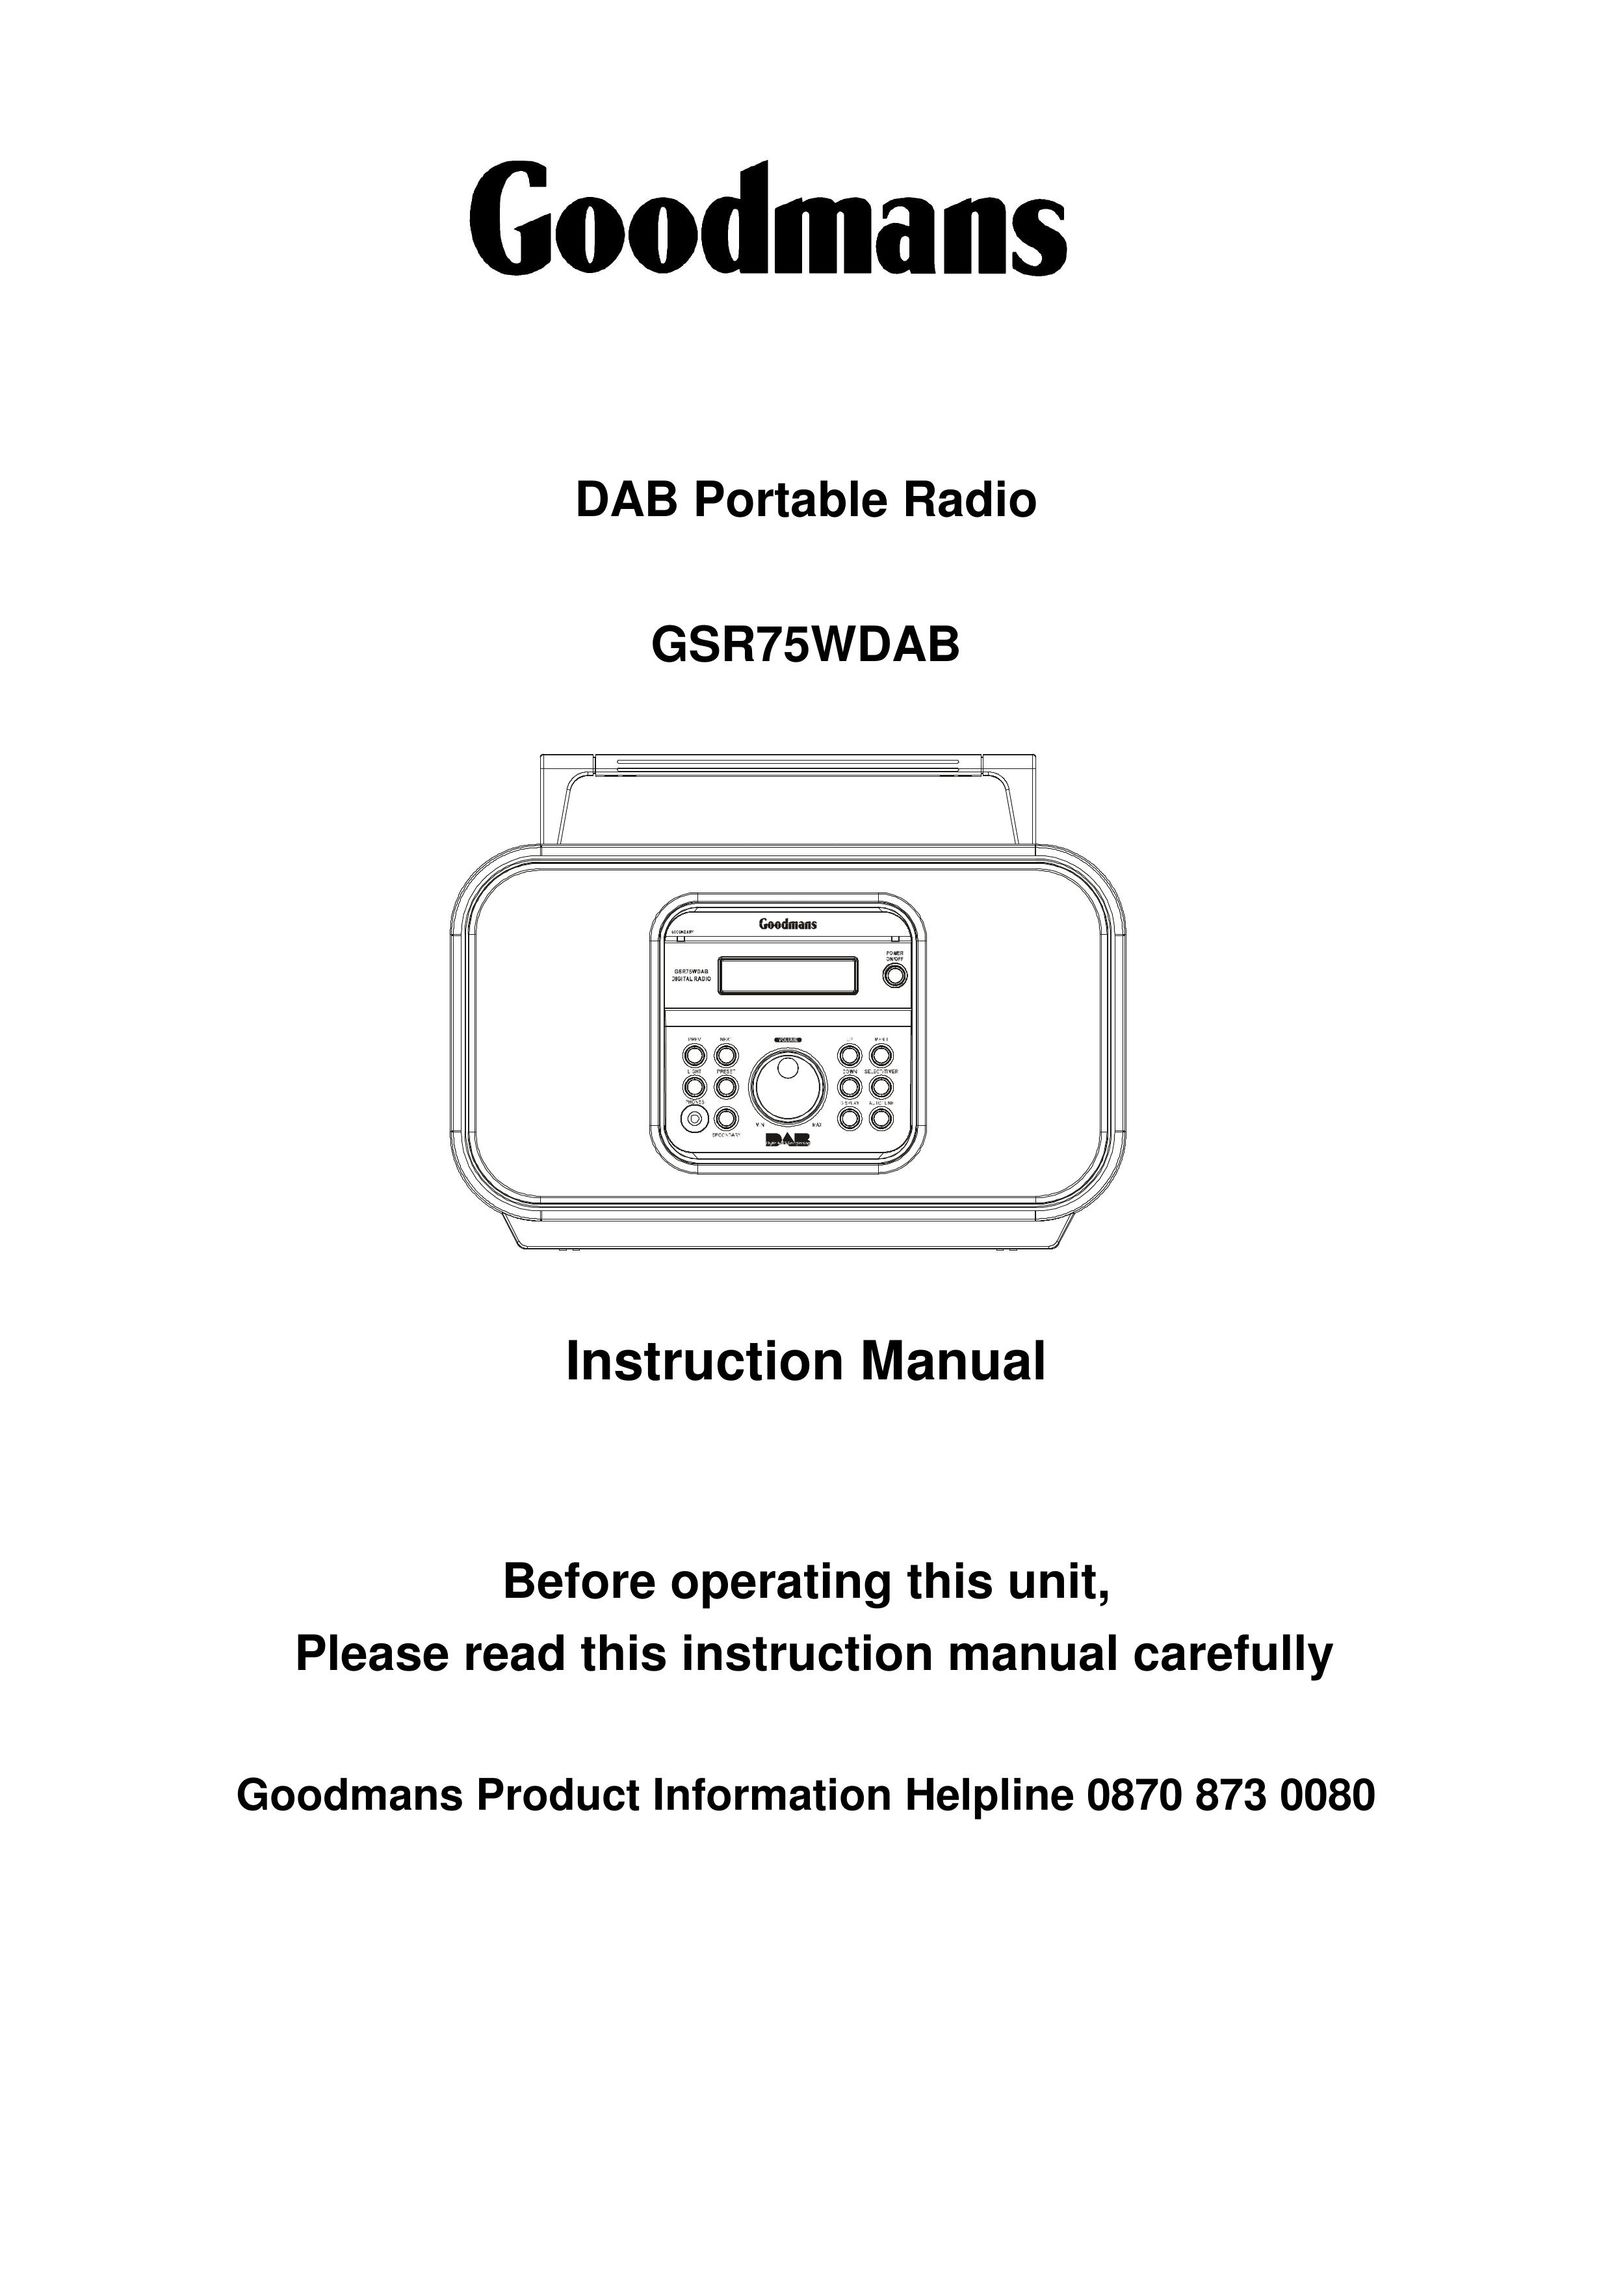 Goodmans GSR75WDAB Portable Radio User Manual